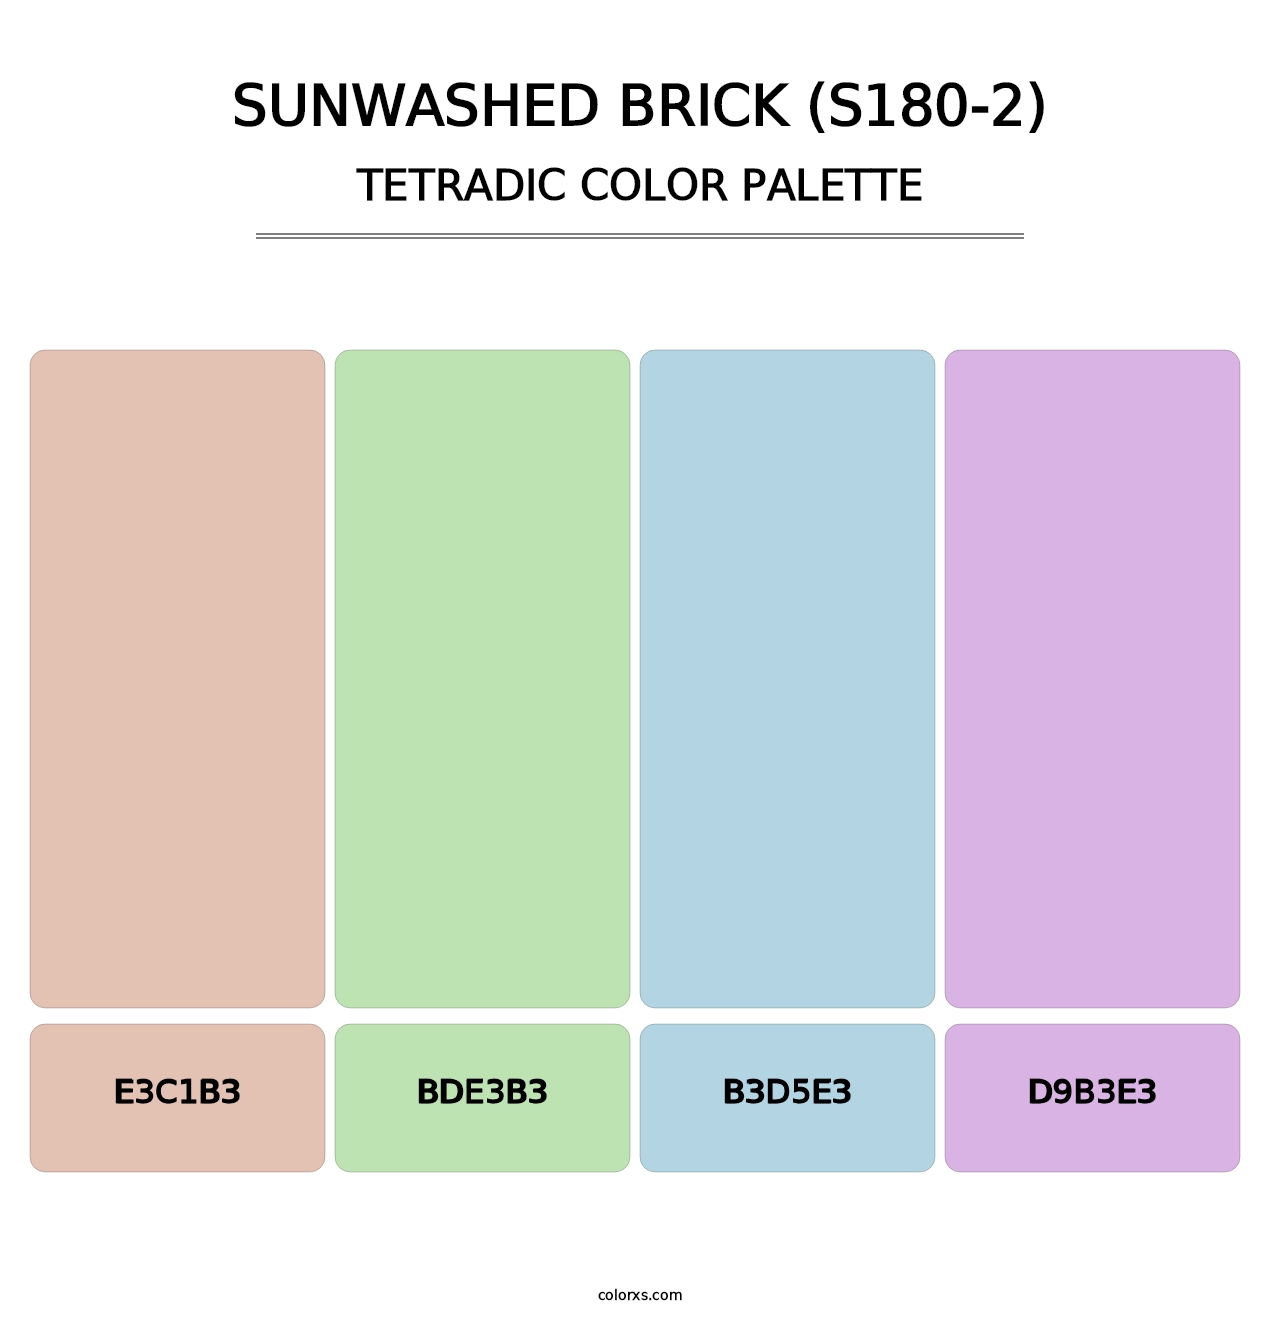 Sunwashed Brick (S180-2) - Tetradic Color Palette